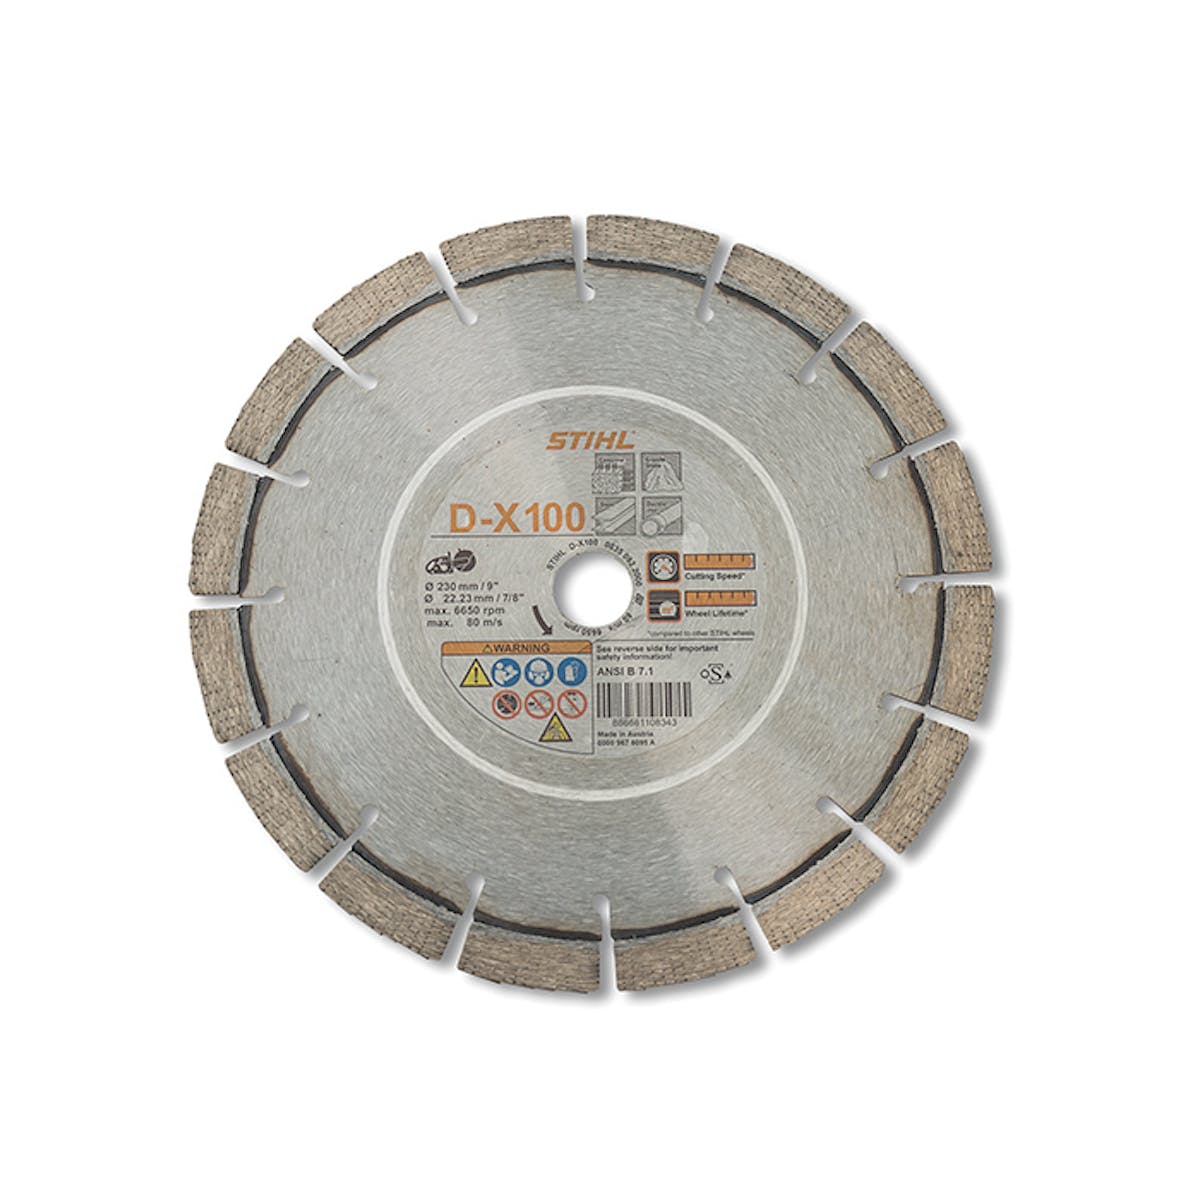 D-X 100 Diamond Wheel for Hard StoneConcrete - Premium Grade